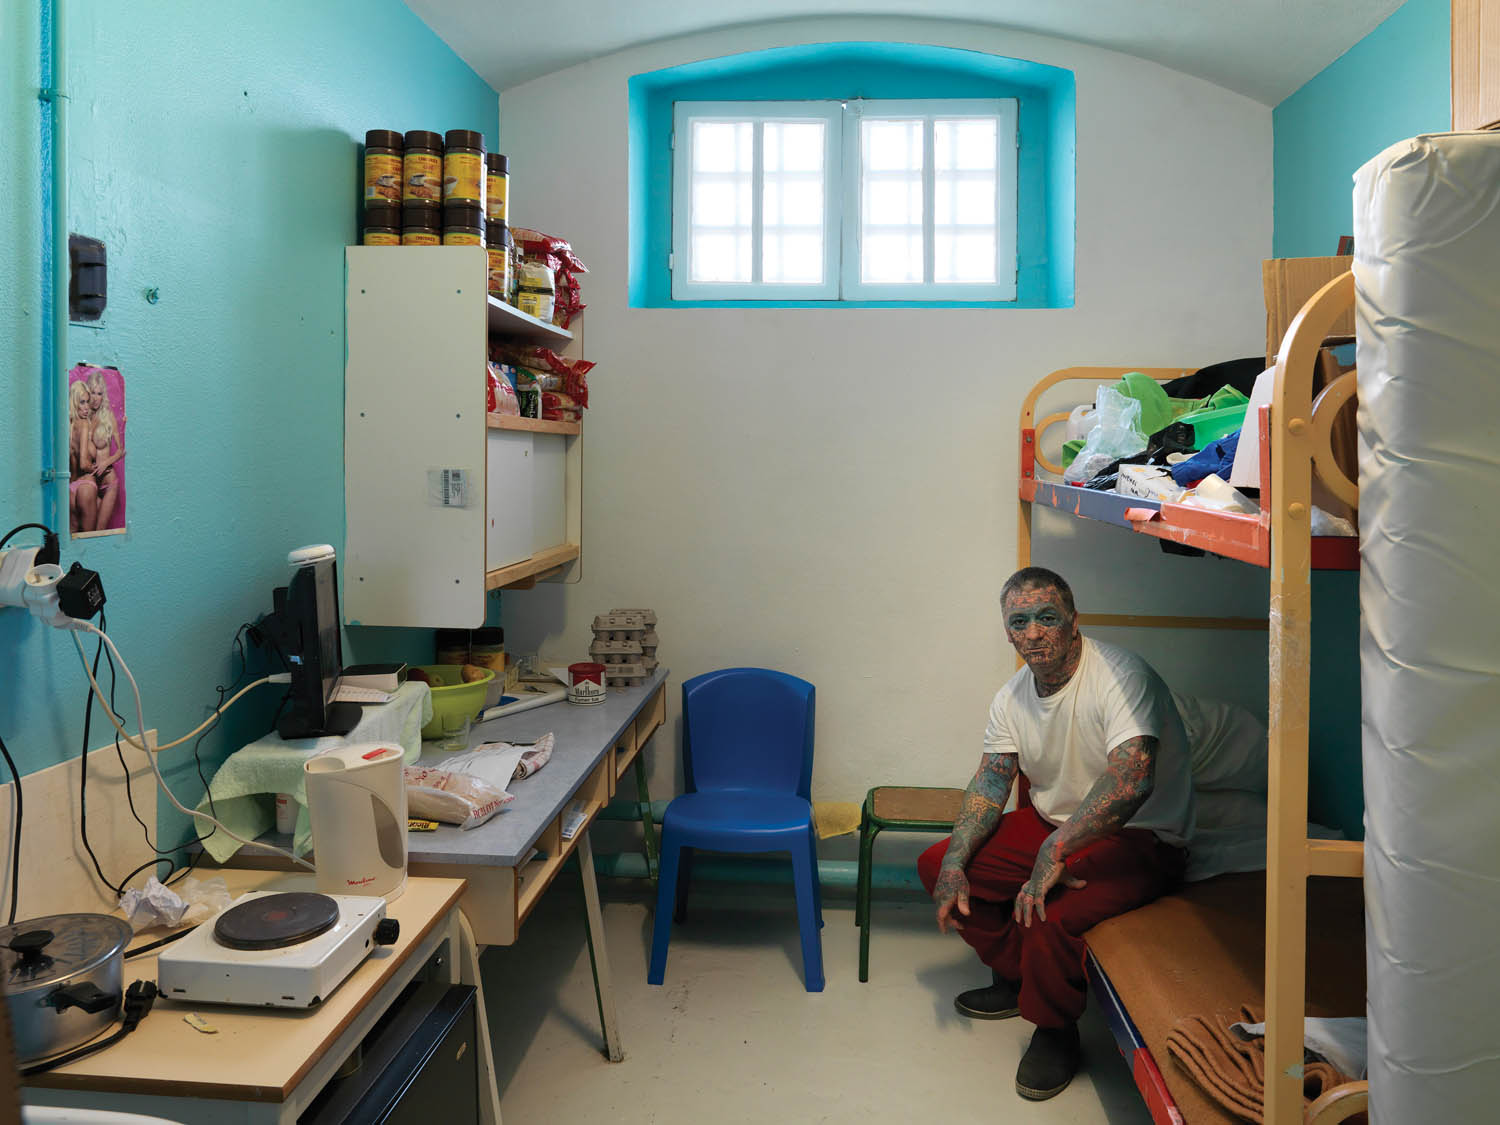 A prisoner in his cell in the Maison d’arrêt de Bois-d’Arcy. France, 2013. Photograph by Jan Banning.